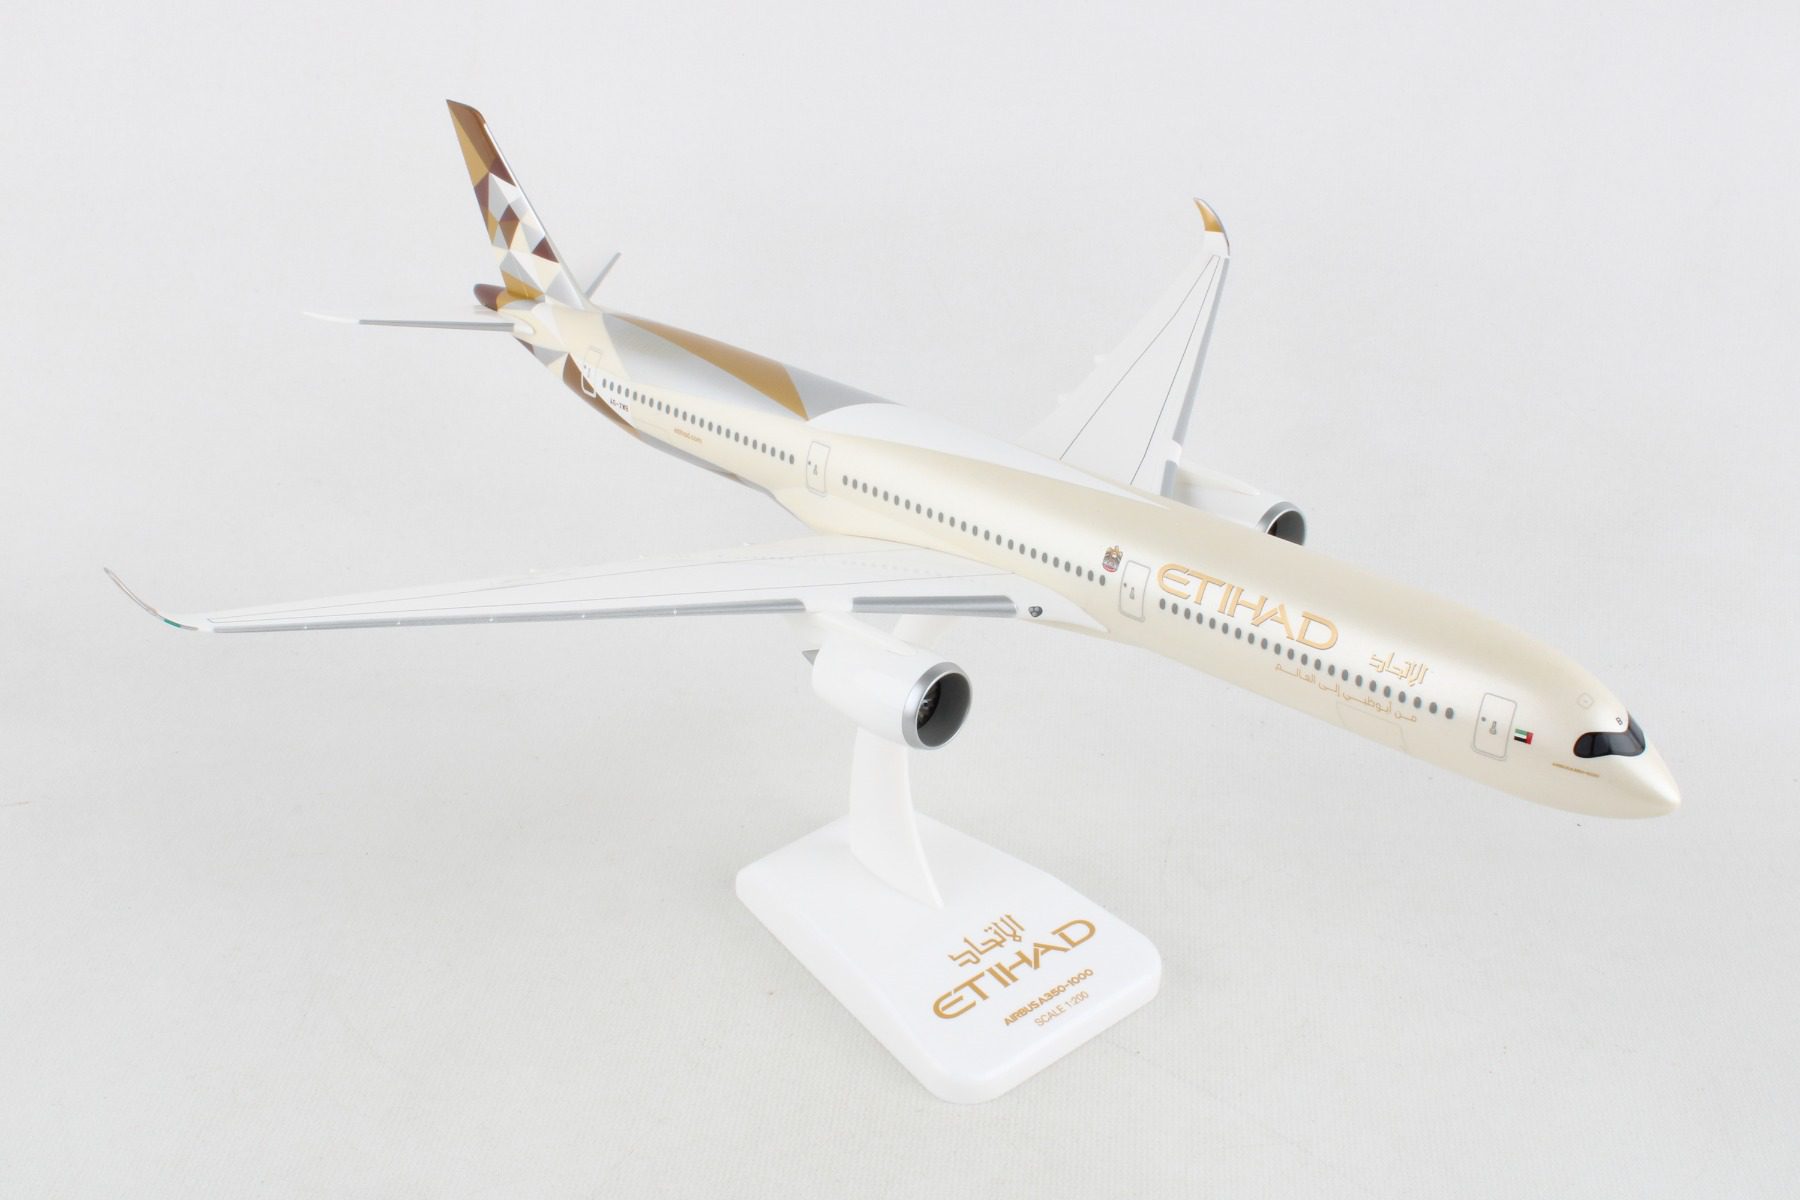 HOGAN ETIHAD A350-1000